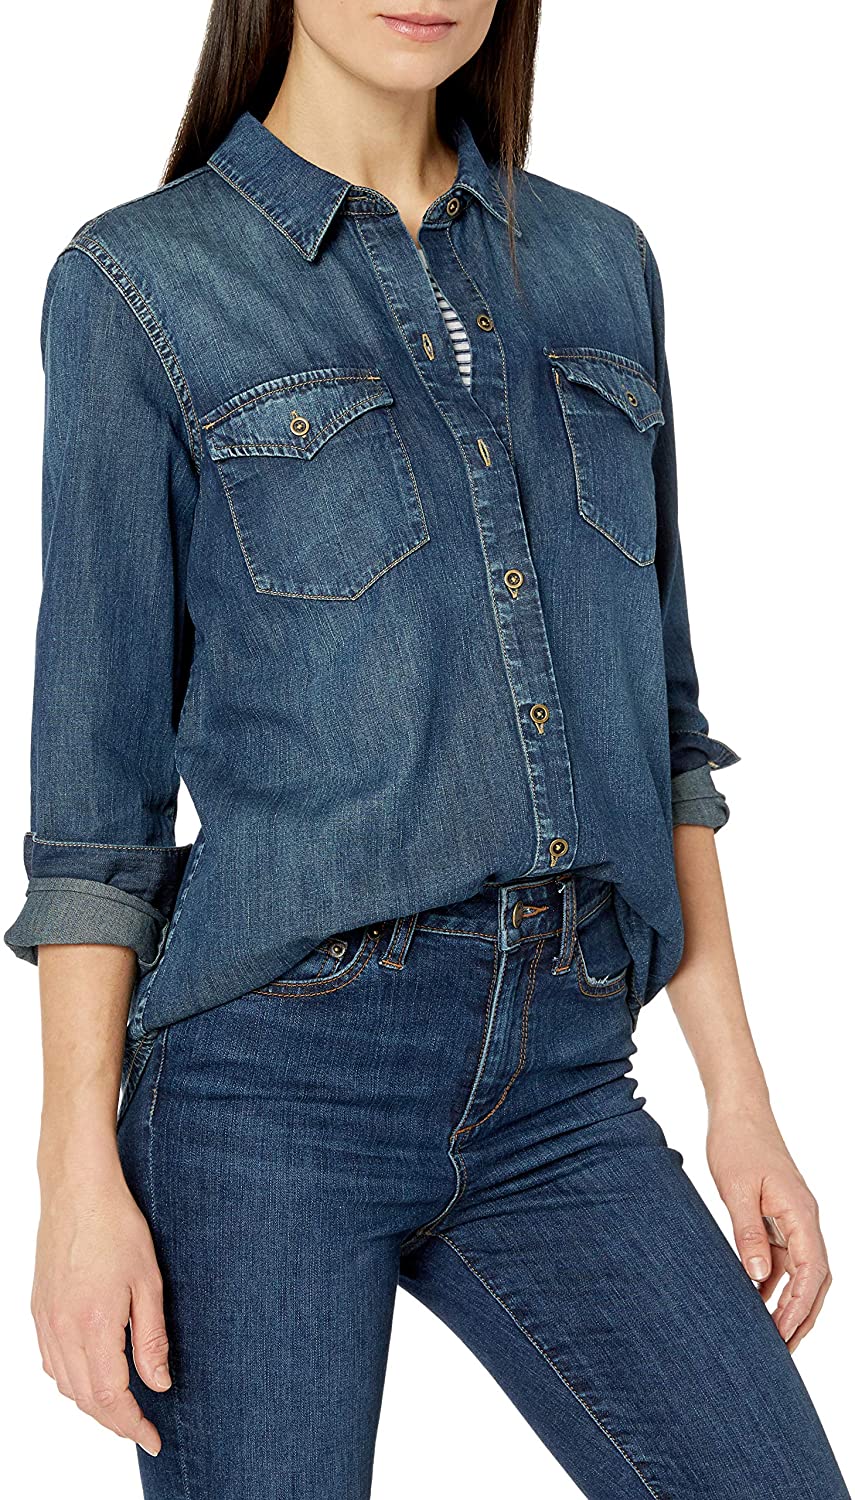 Price:$26.04    Amazon Brand - Goodthreads Women's Denim Long-Sleeve Shirt  Clothing